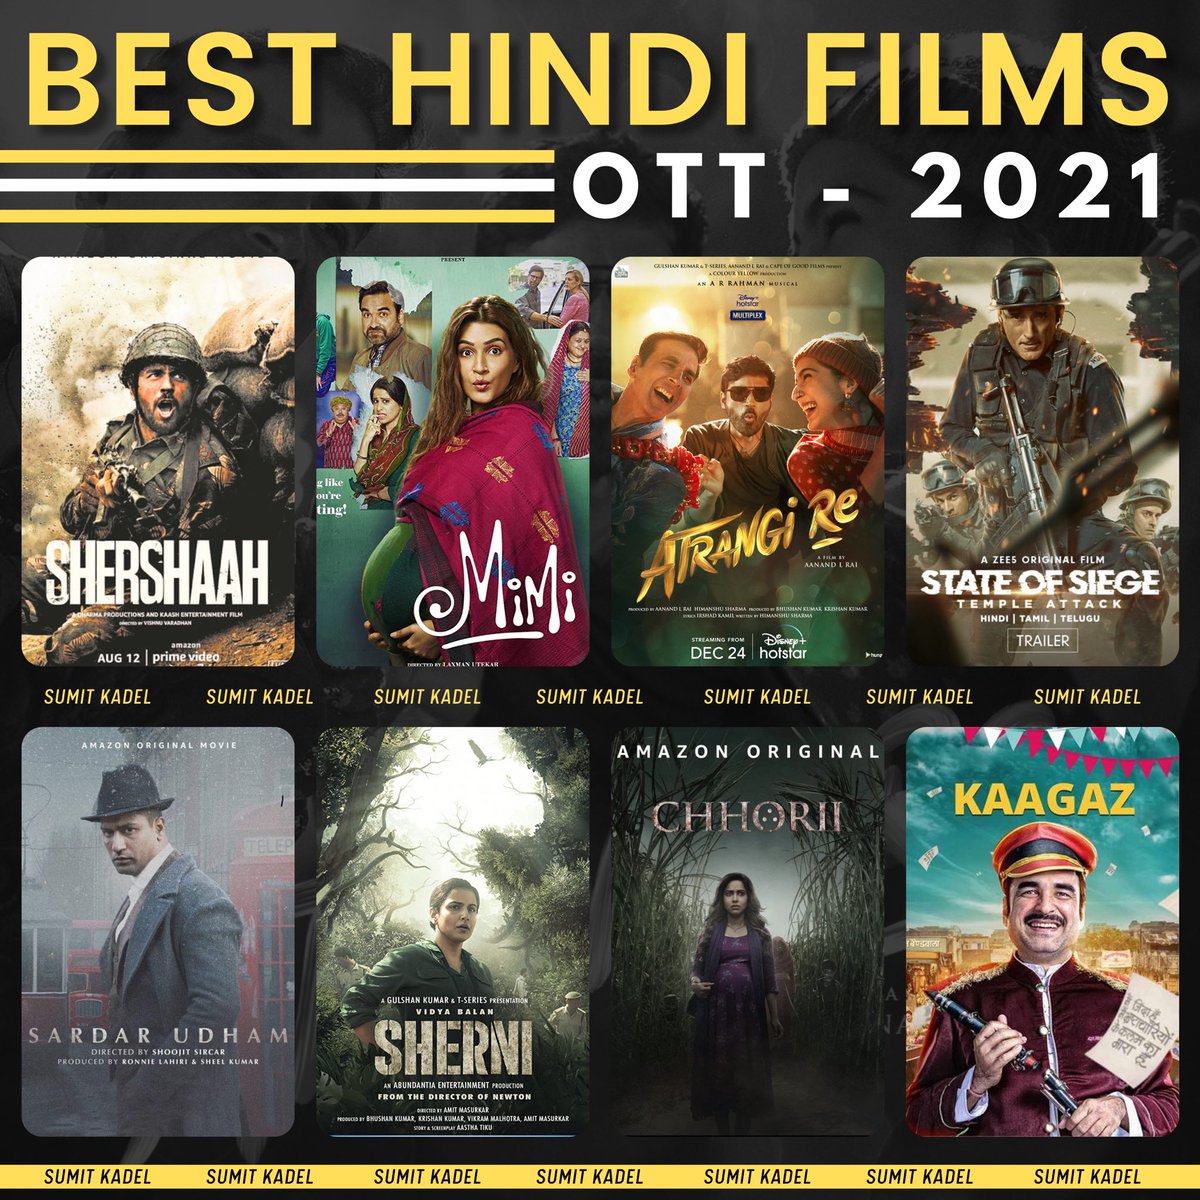 MY PICKS - Best Hindi Films ( OTT 2021 ) - 

🌟 #Shershaah 
🌟 #Mimi 
🌟 #AtrangiRe
🌟 #StateofSiezeTempleattack
🌟 #Sardarudham 
🌟 #Sherni
🌟 #Chhorri 
🌟 #Kaagaz
🌟 #MeenakshiSundareshwar